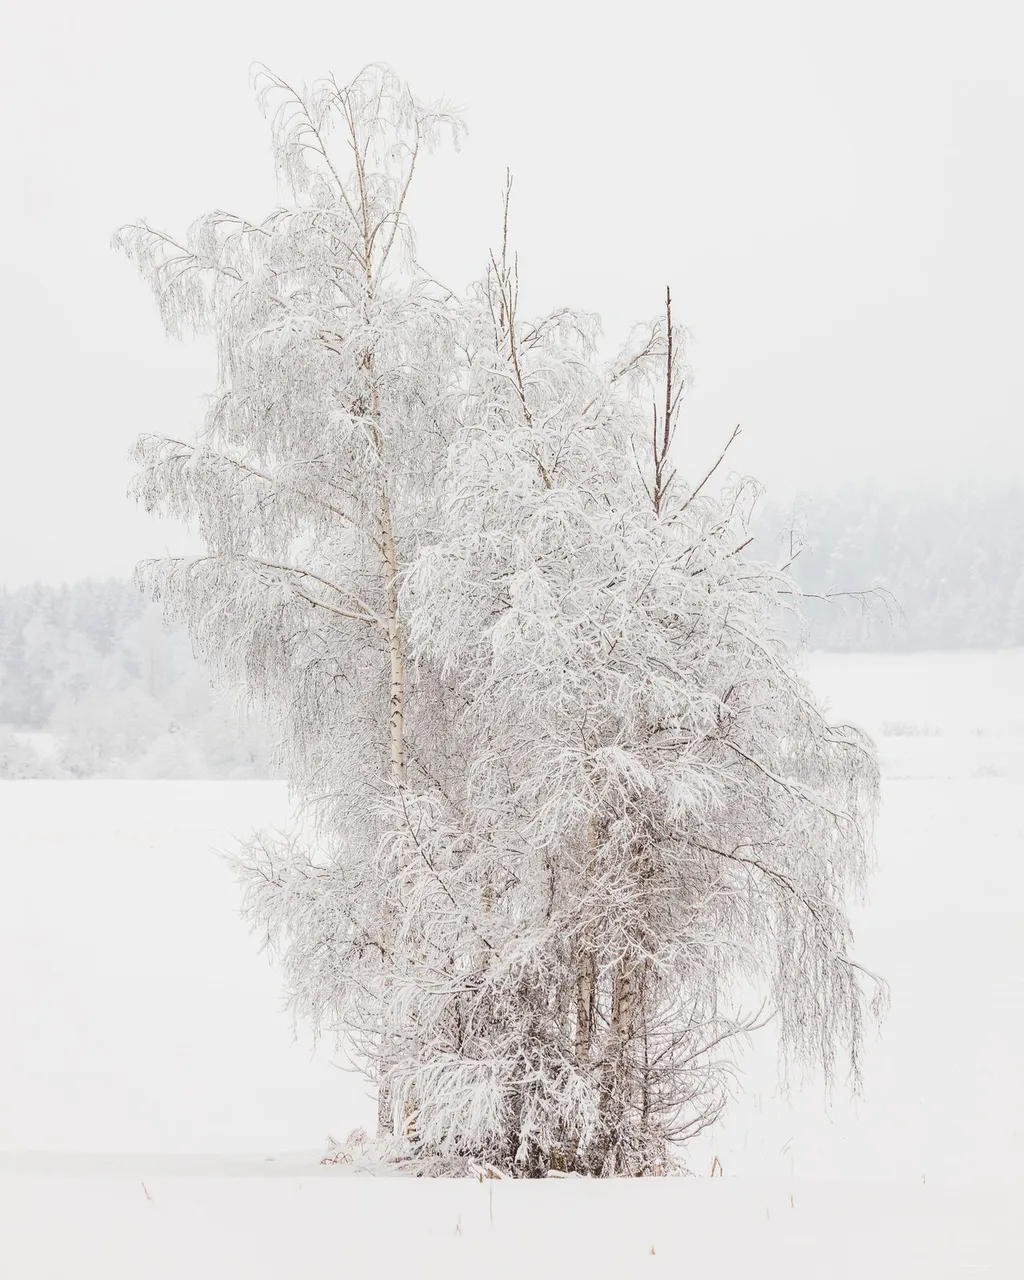 Snowy Birch Trees